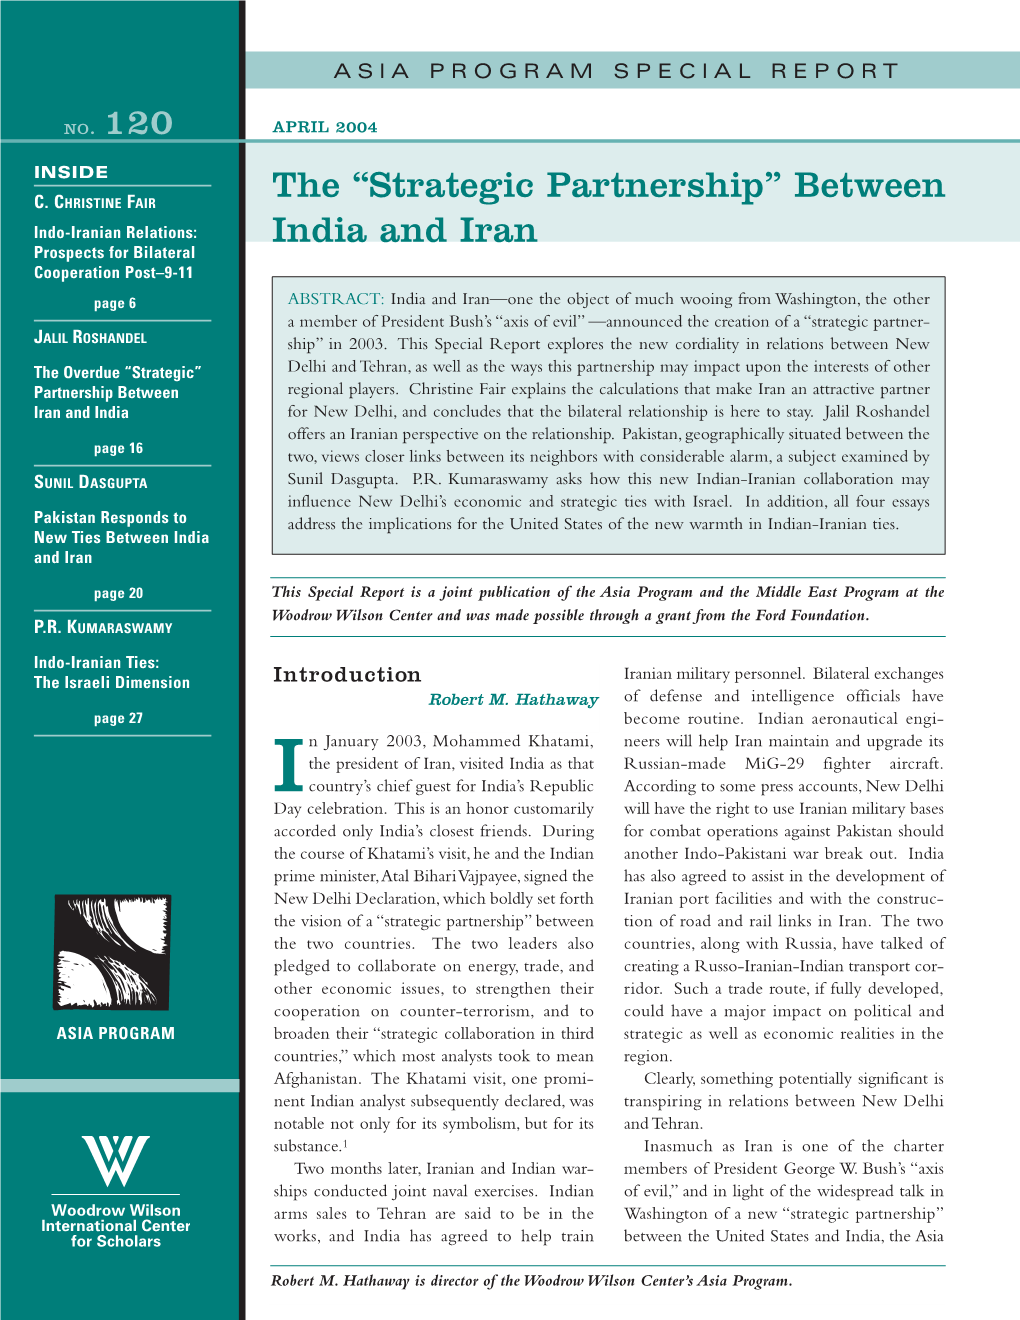 The Strategic Partnership Between India and Iran